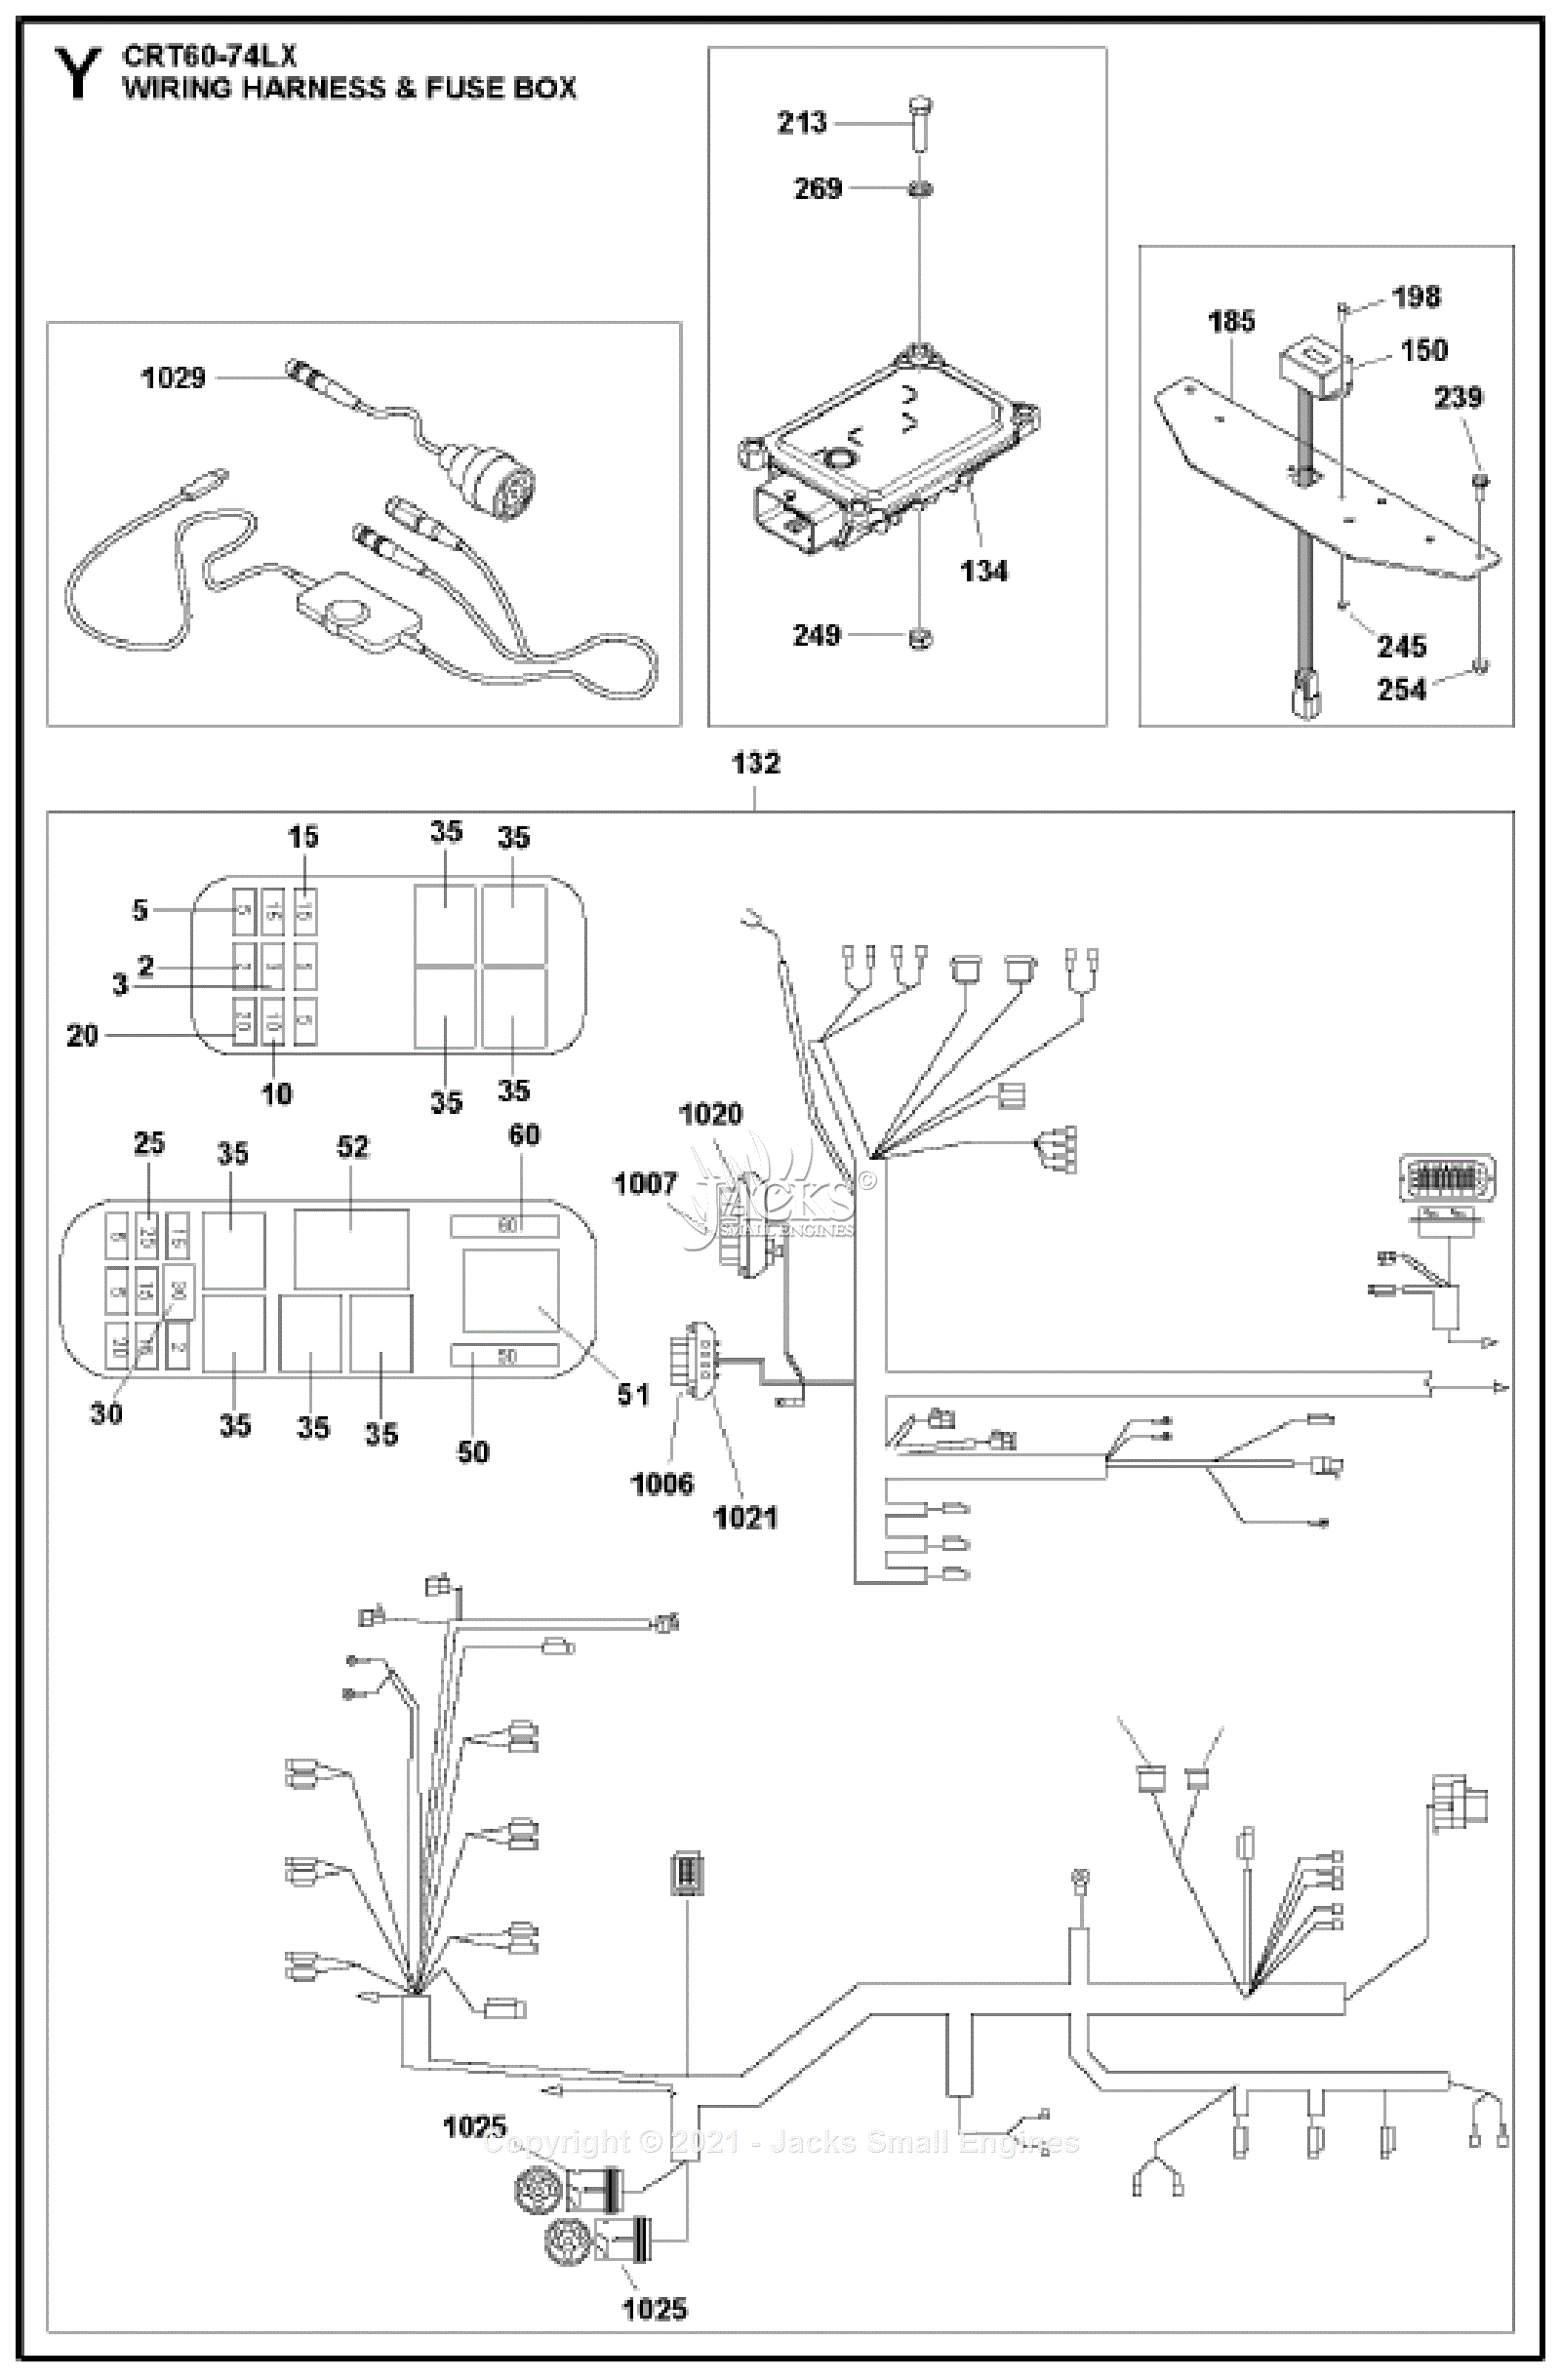 John Deere Tractor Fuse Box: Location, Diagrams & Wiring